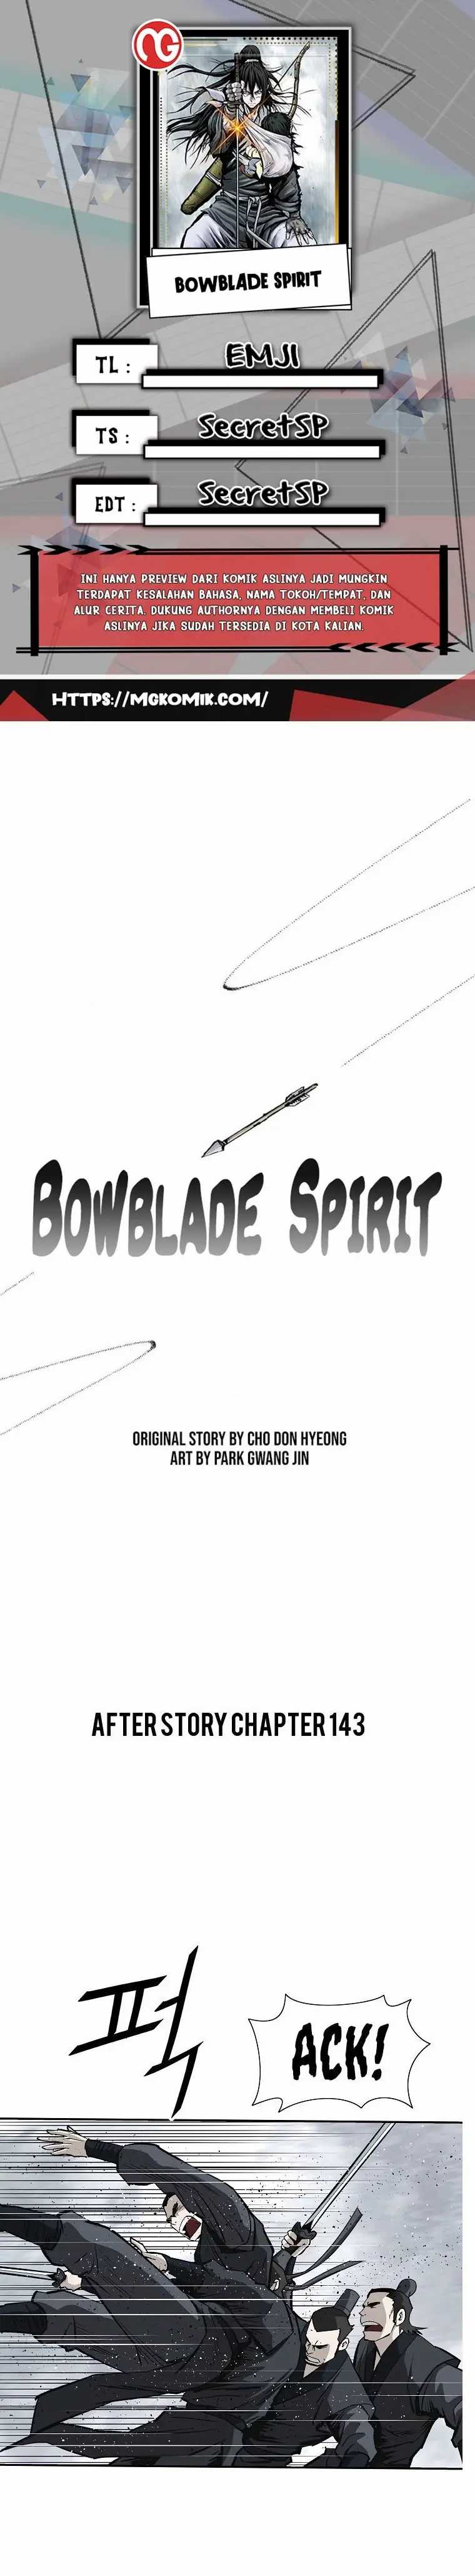 Bowblade Spirit Chapter 143